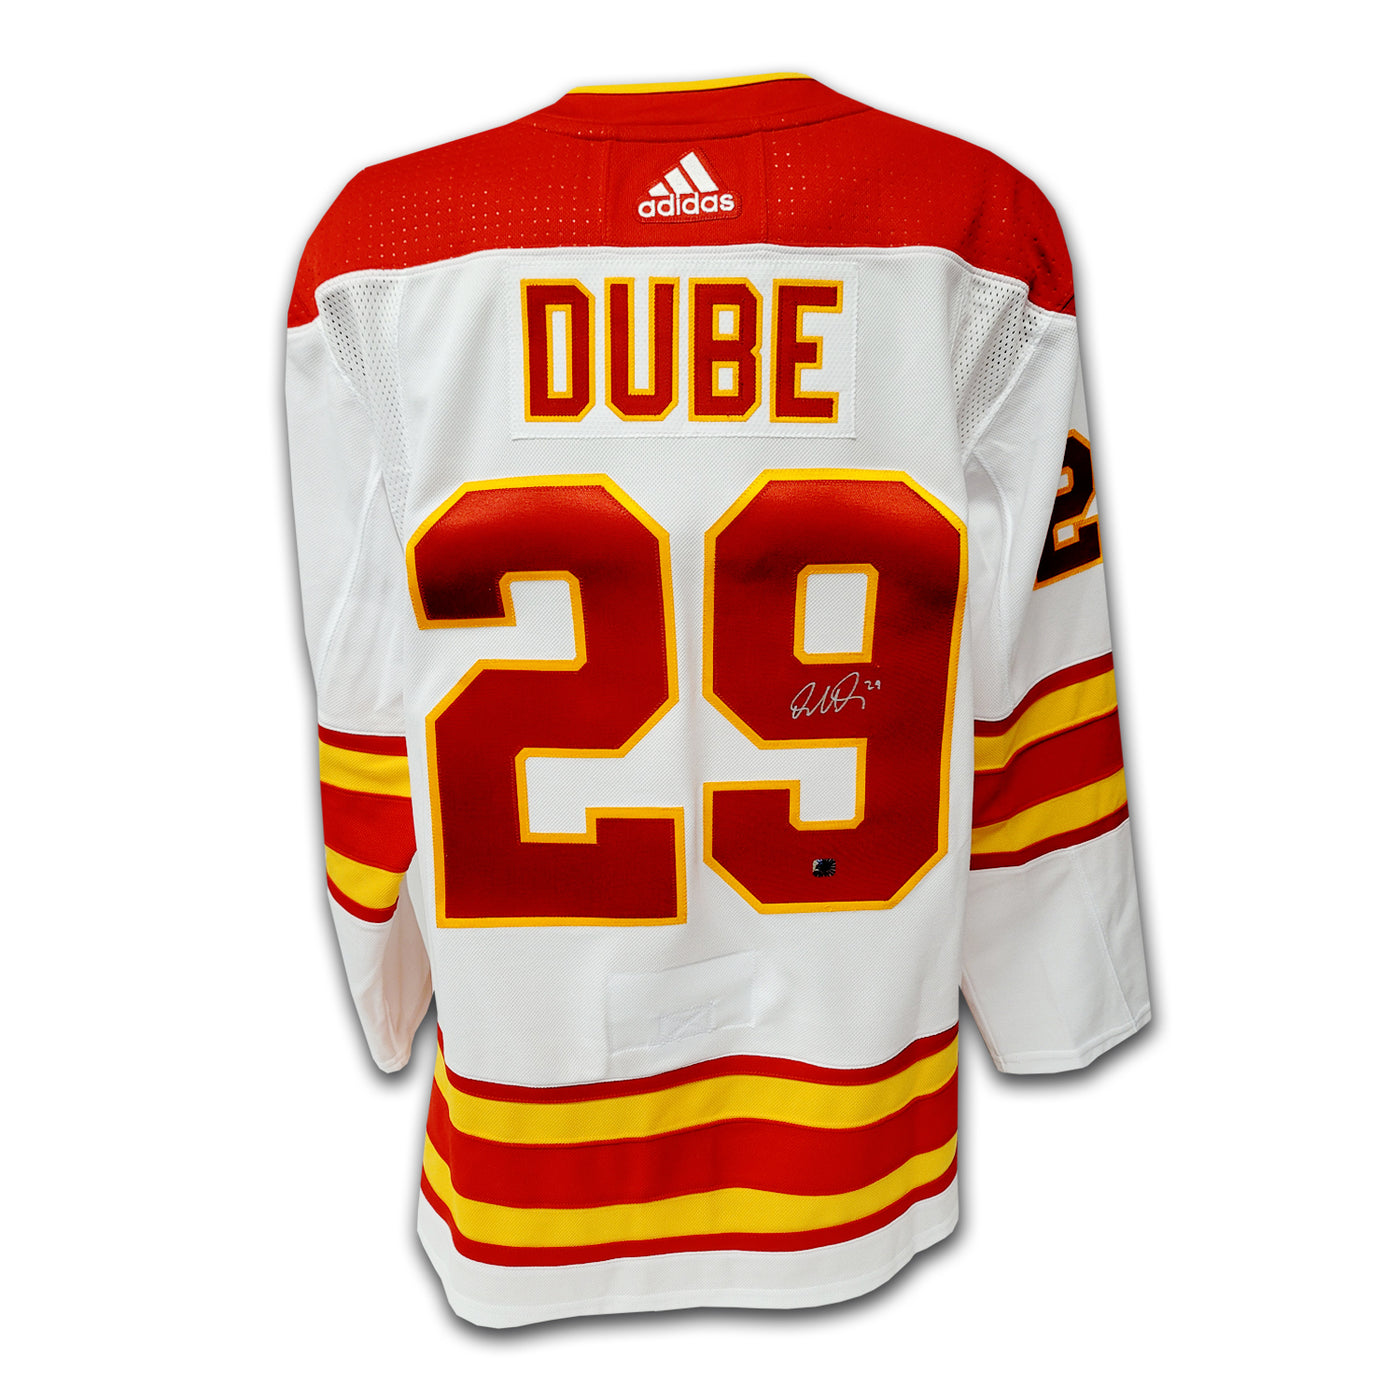 Dillon Dube Calgary Flames Away Adidas Jersey